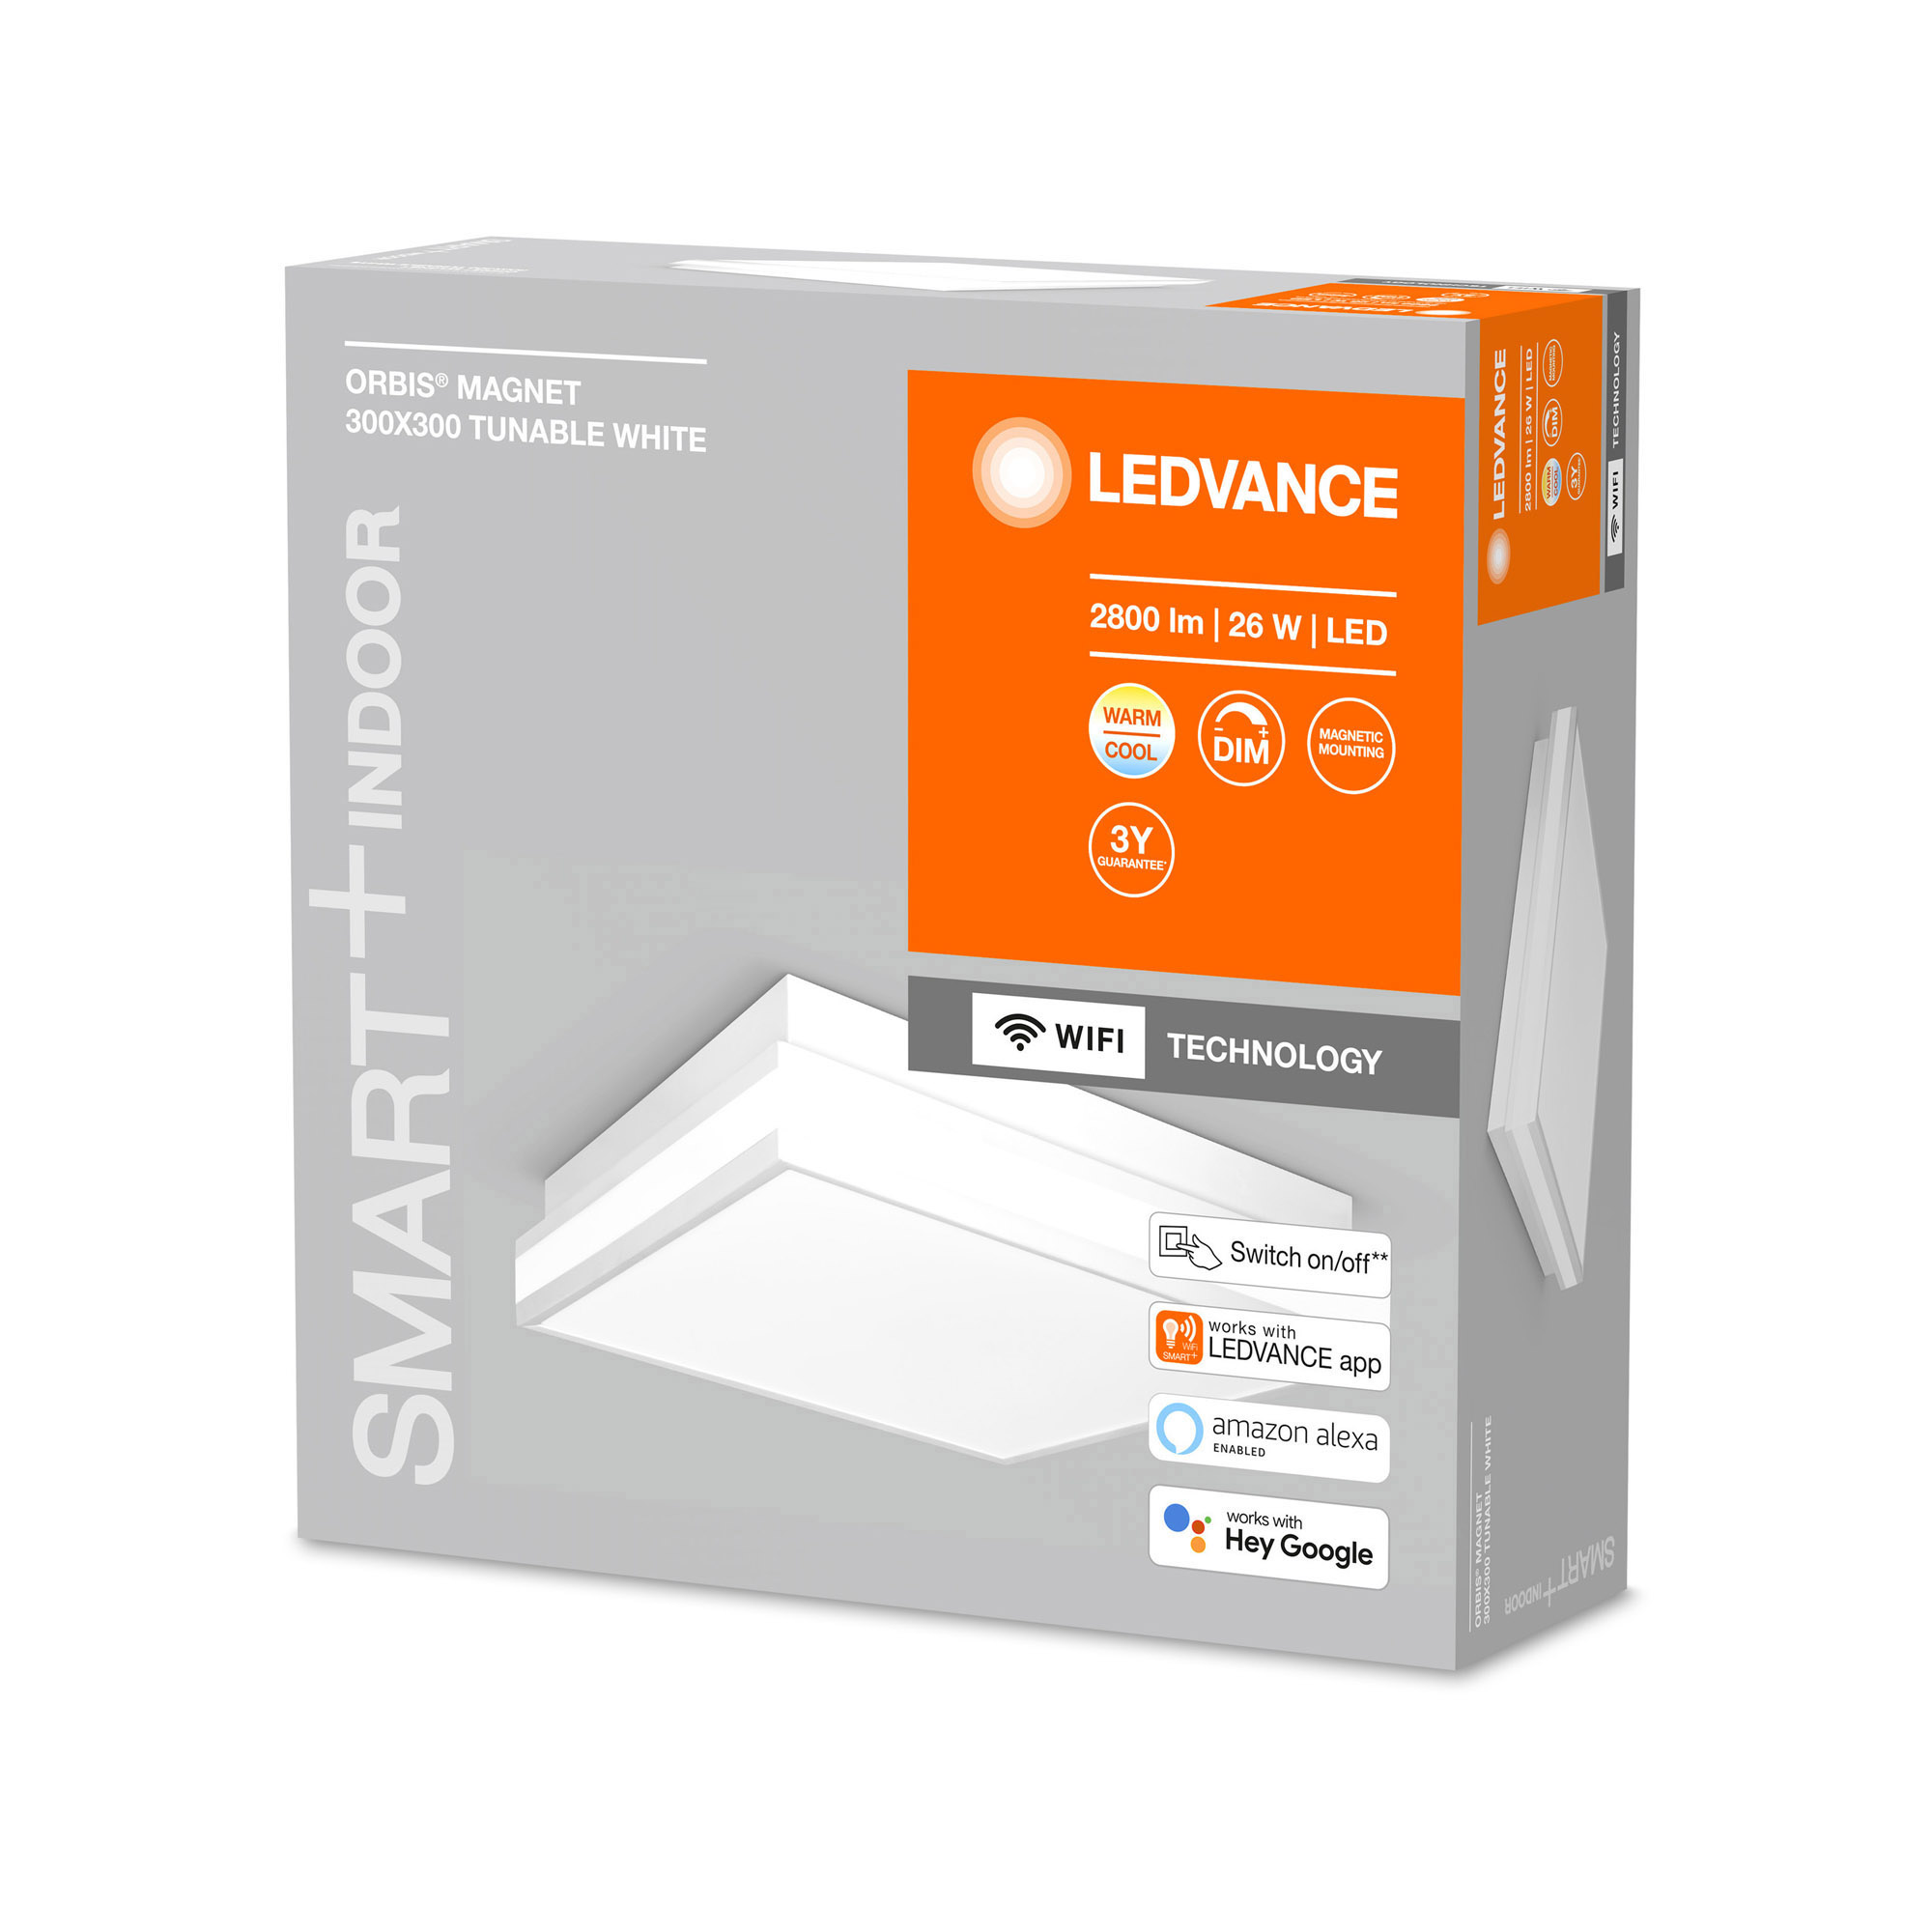 LEDVANCE SMART+ WiFi Tunable White LED Ceiling Light ORBIS MAGNET 300x300mm white 2500lm